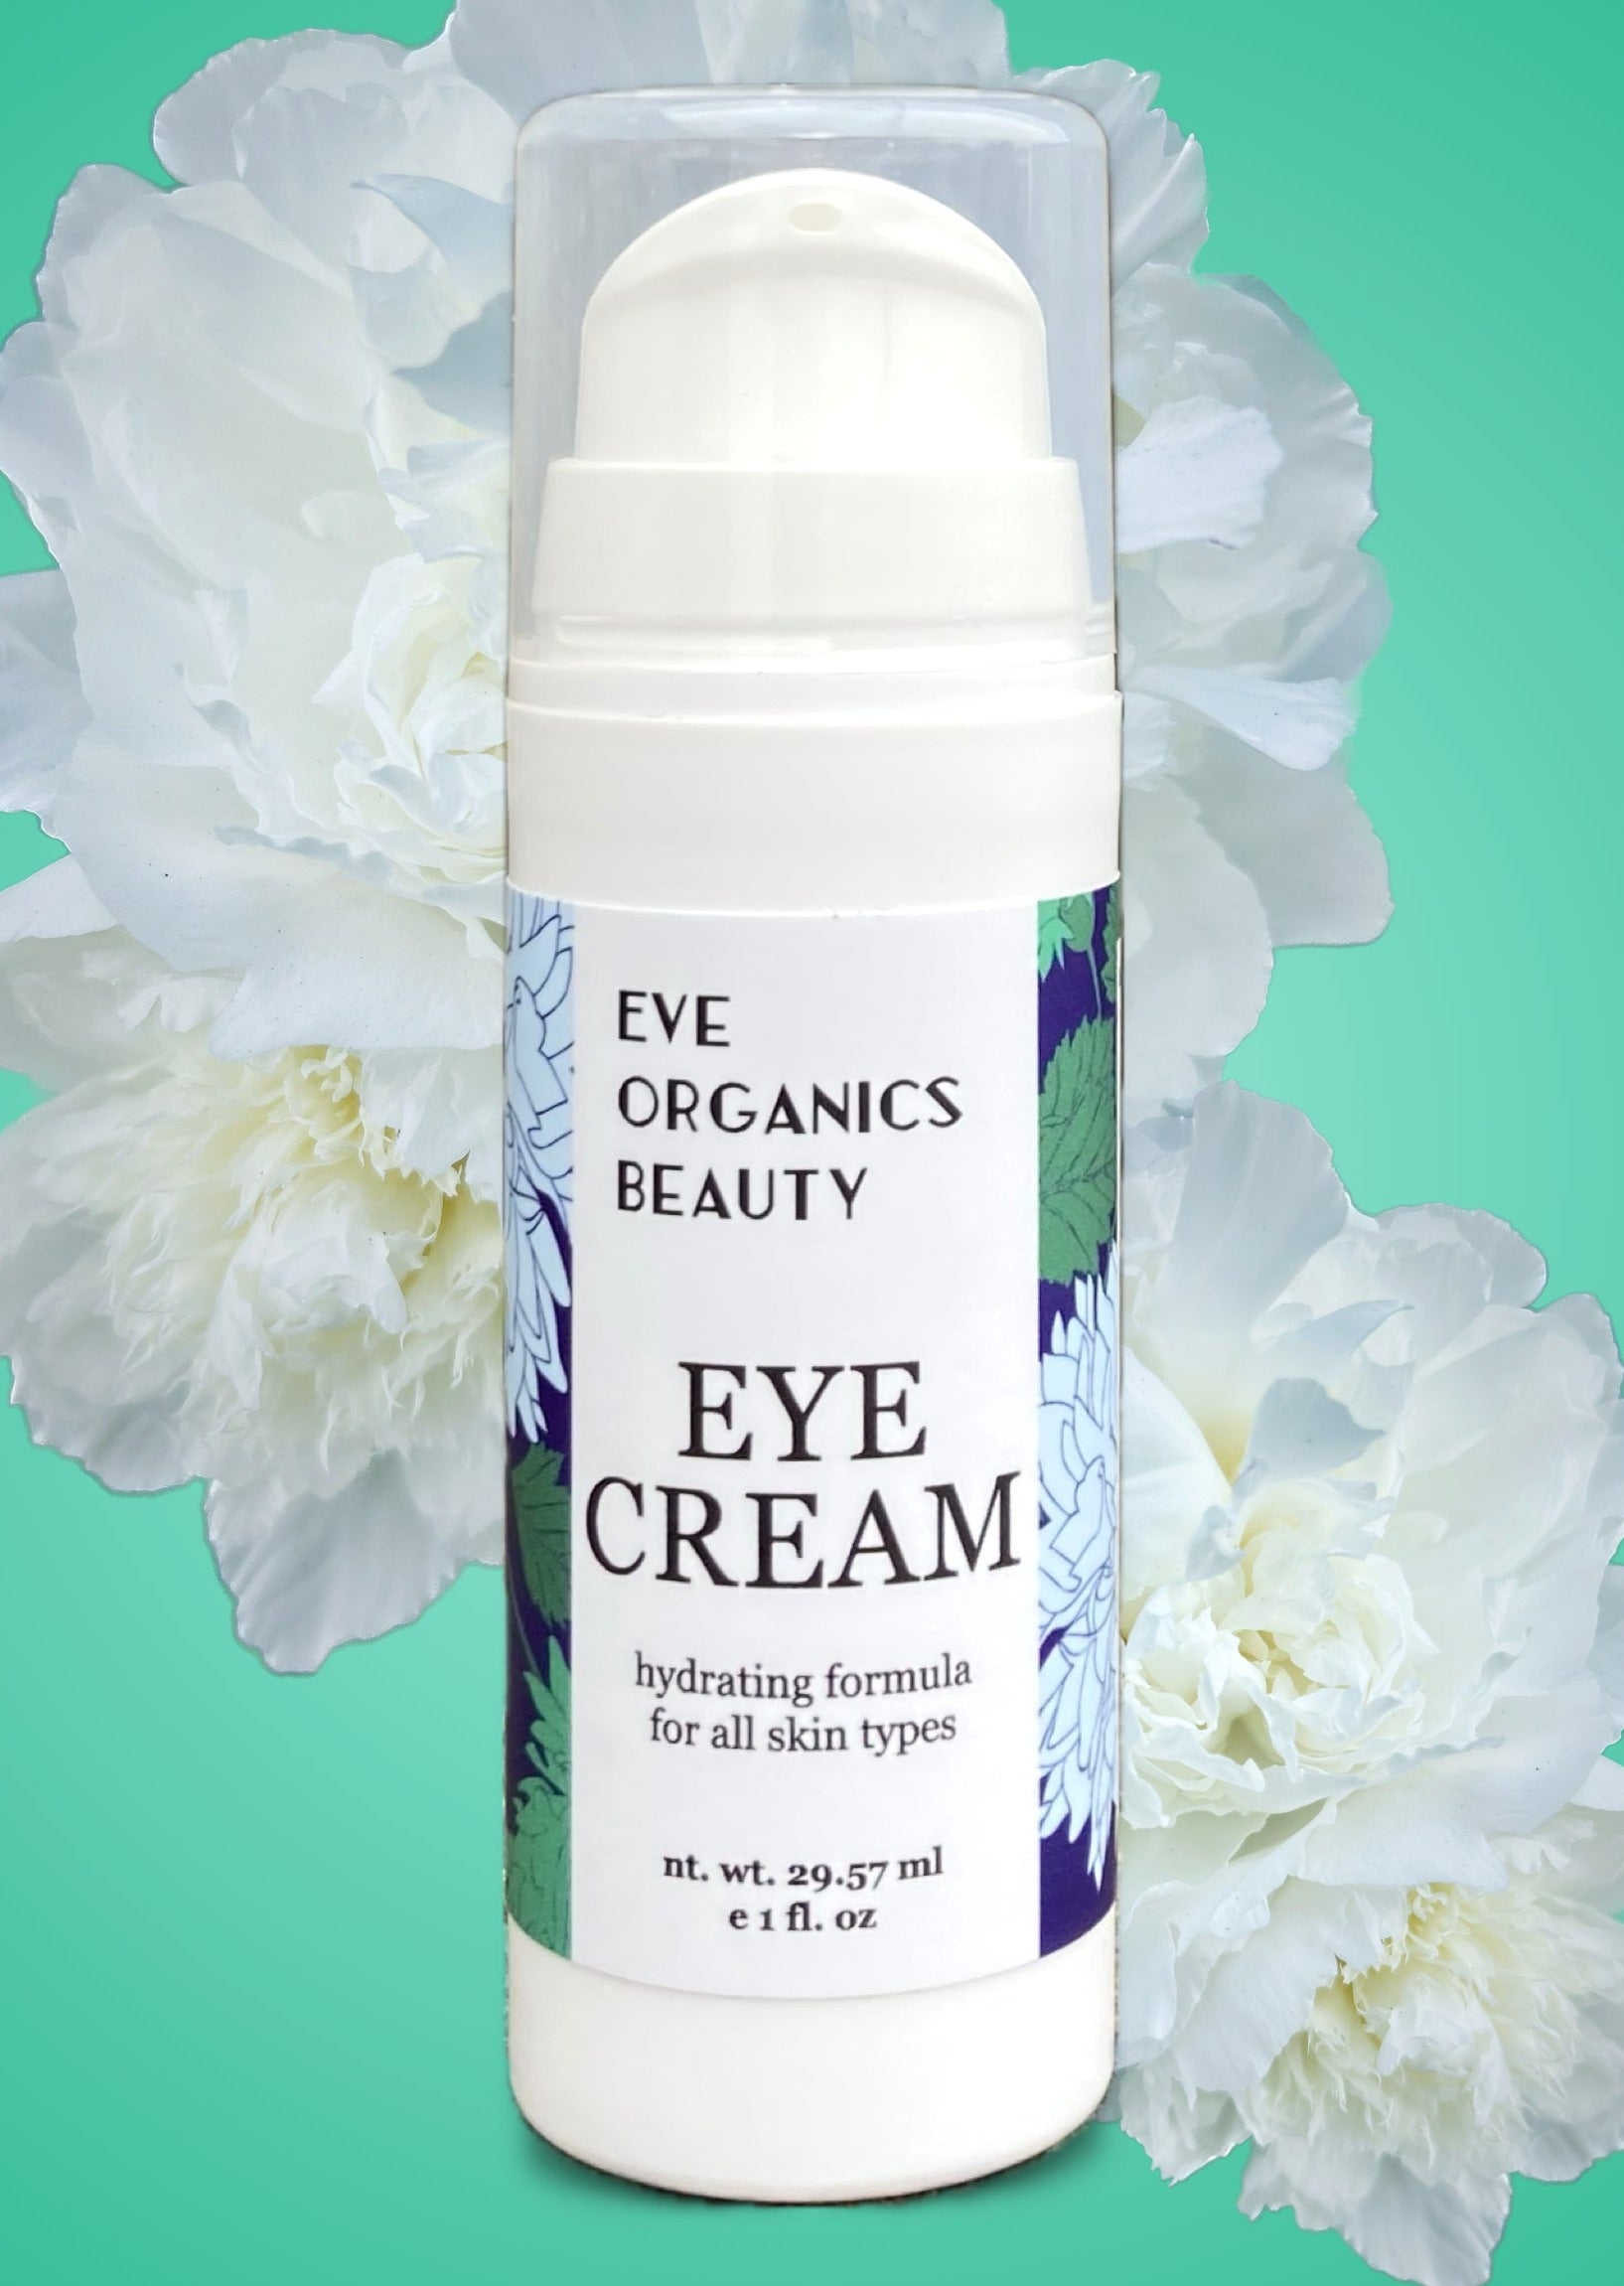 EYE CREAM / Universal / All Skin Types - Eve Organics Beauty